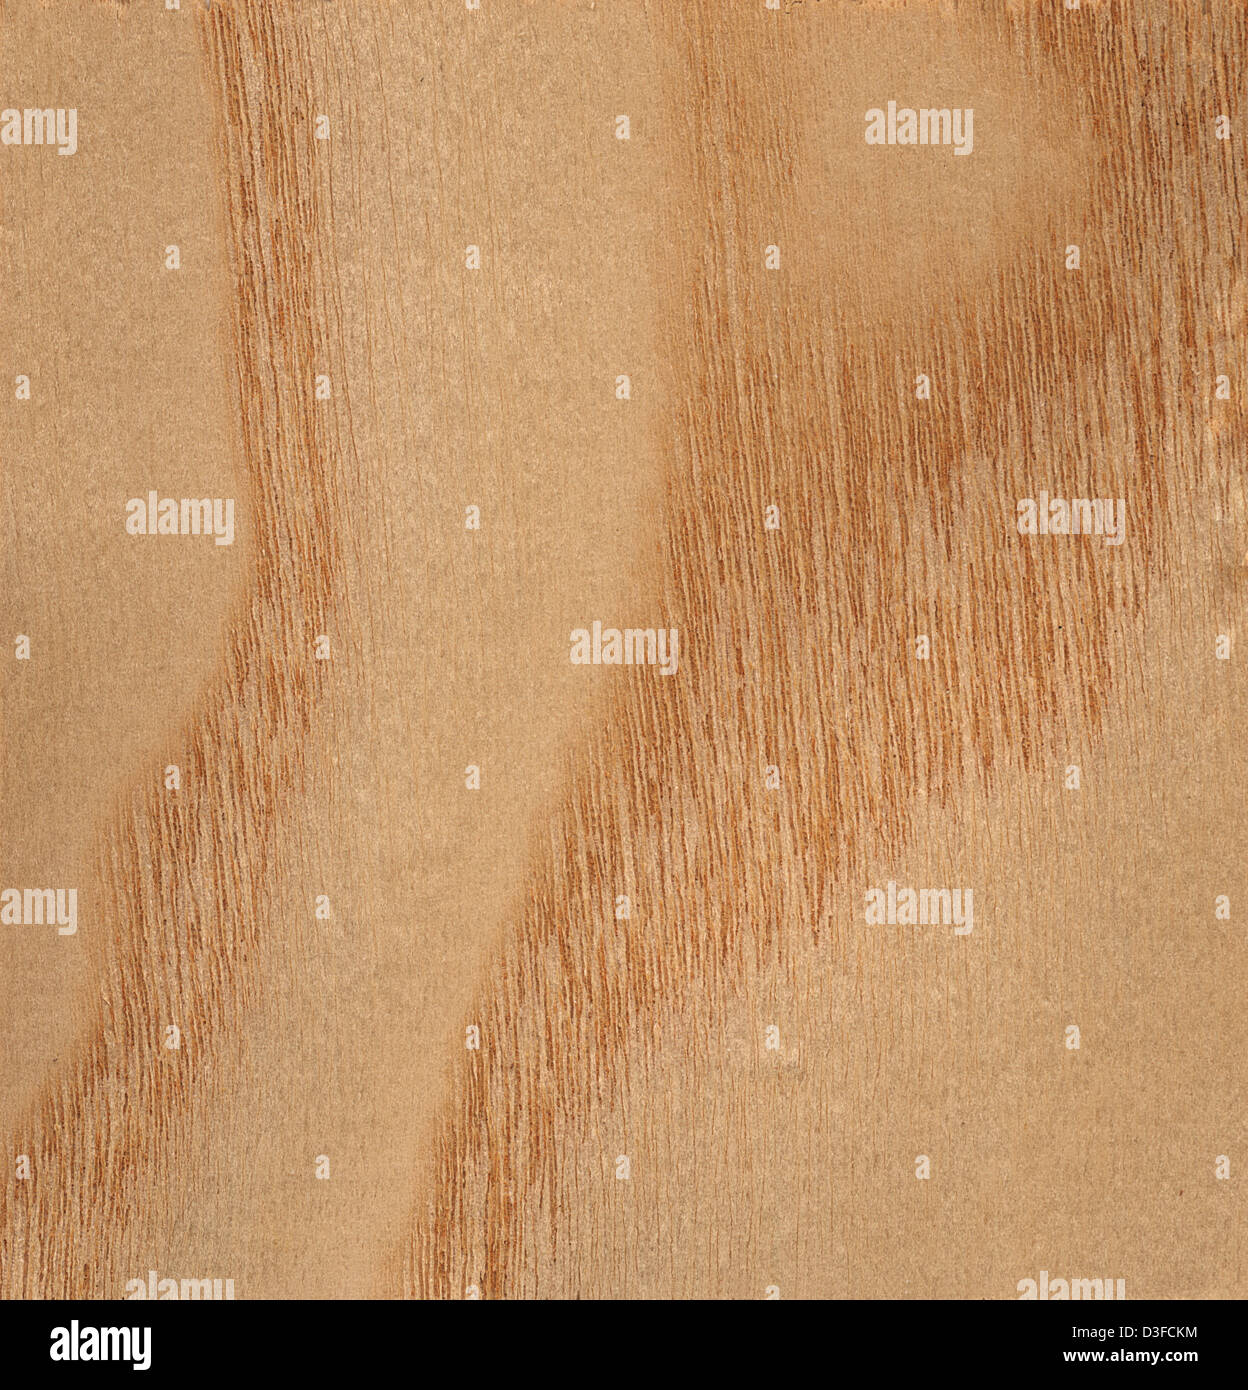 Ash wood showing grain pattern Stock Photo